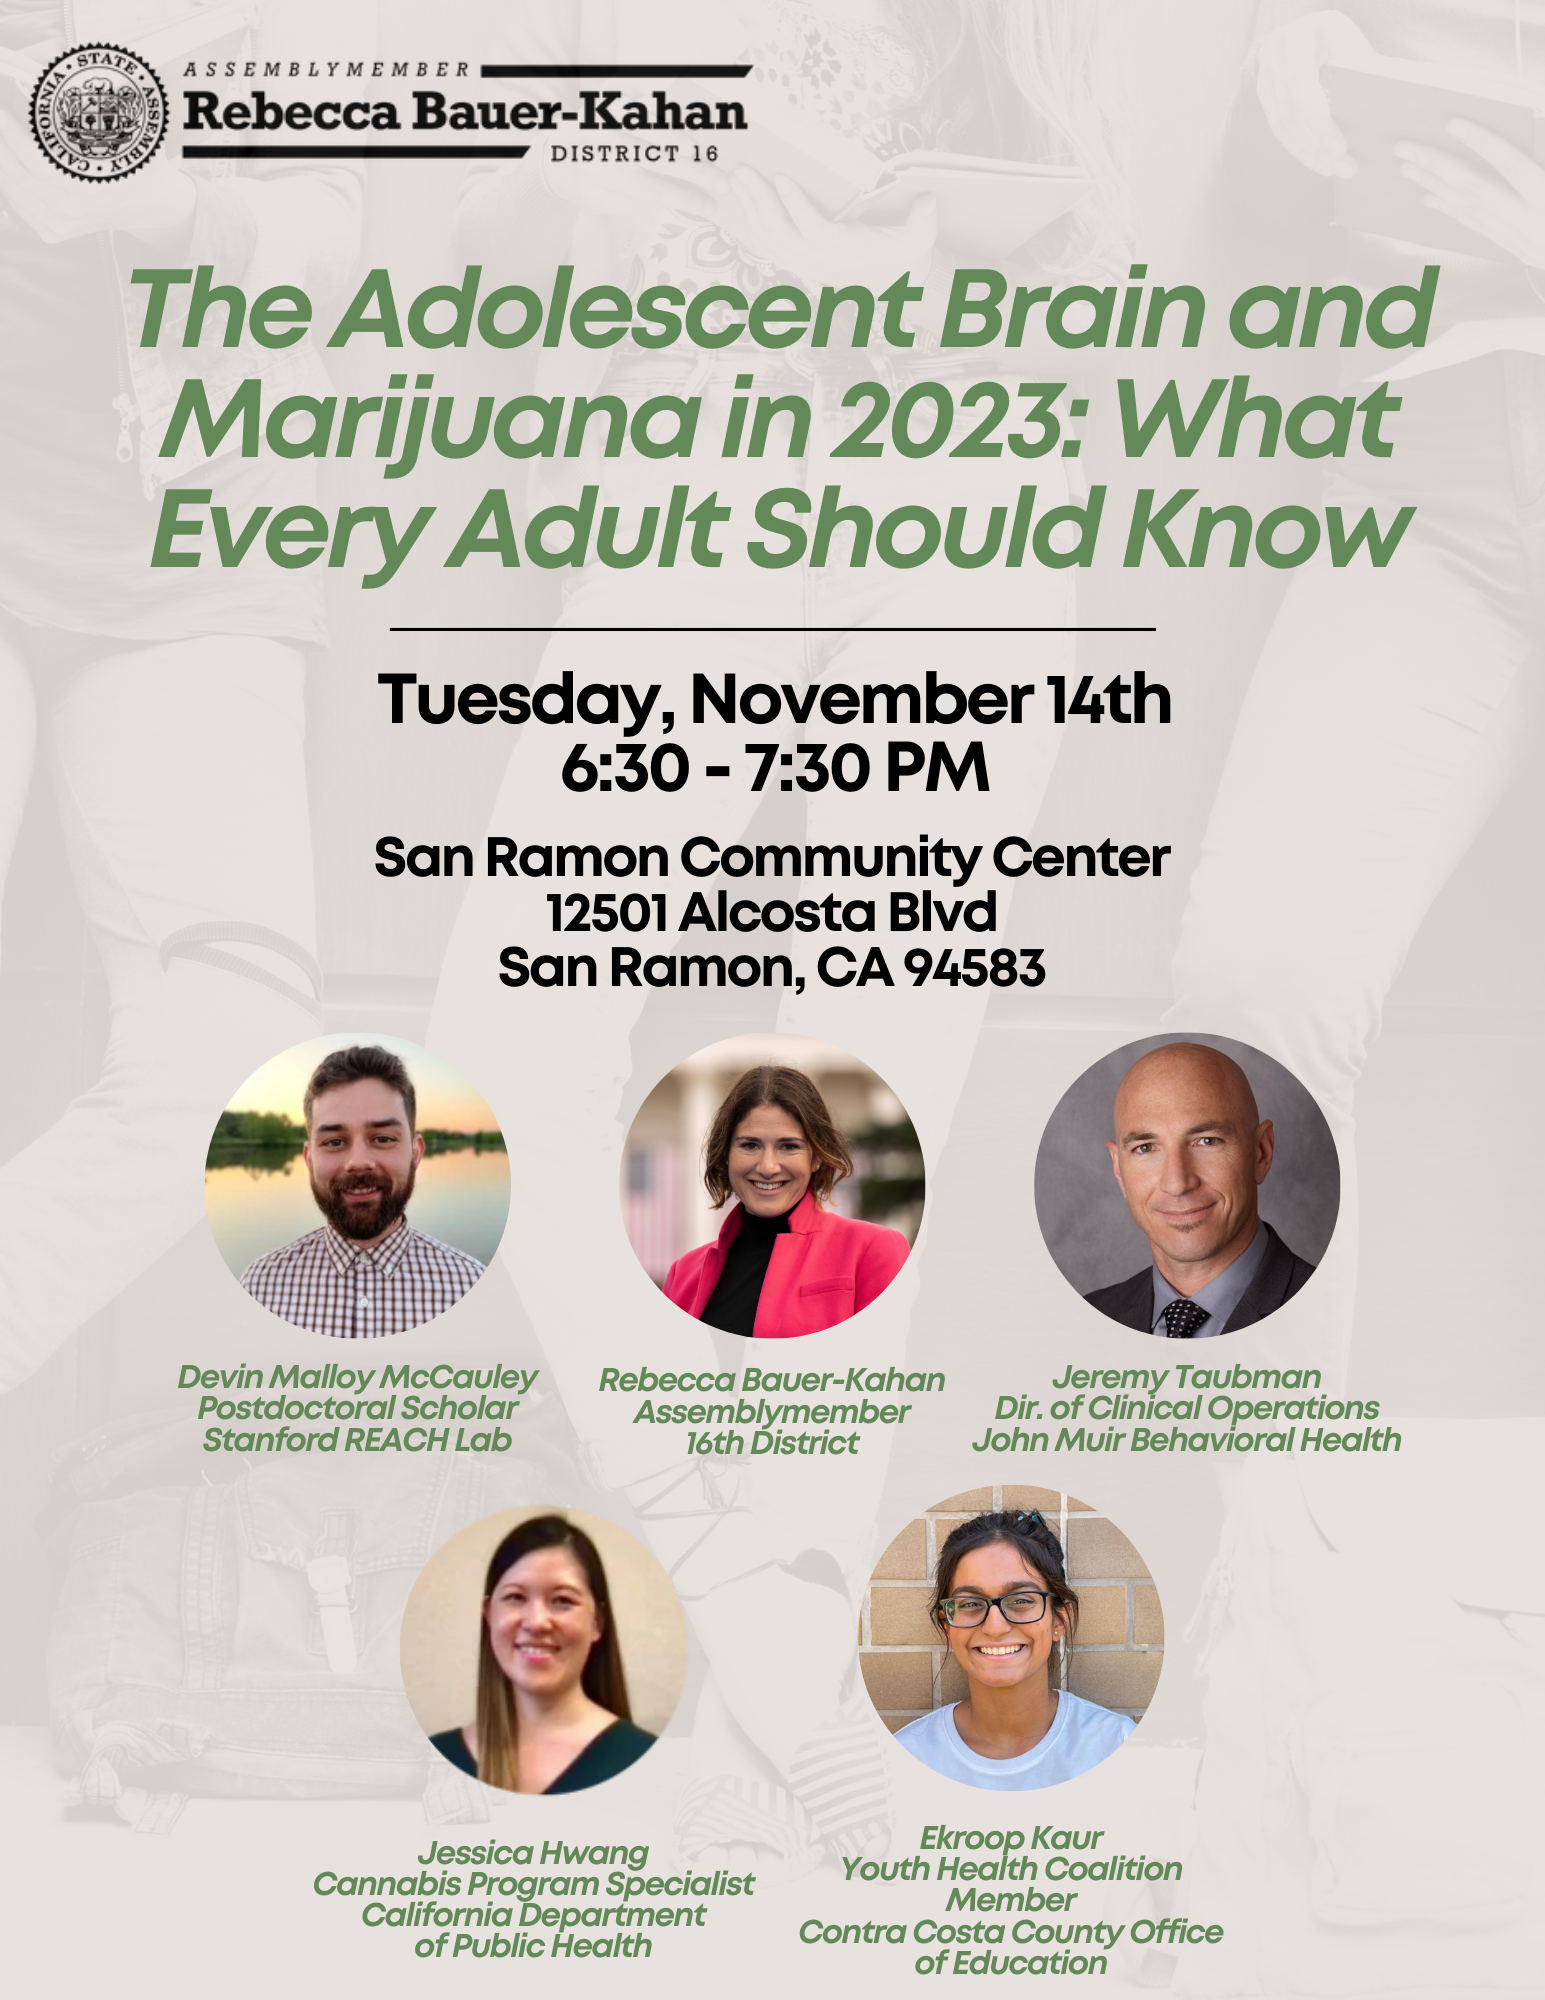 The Adolescent Brain and Marijuana flyer